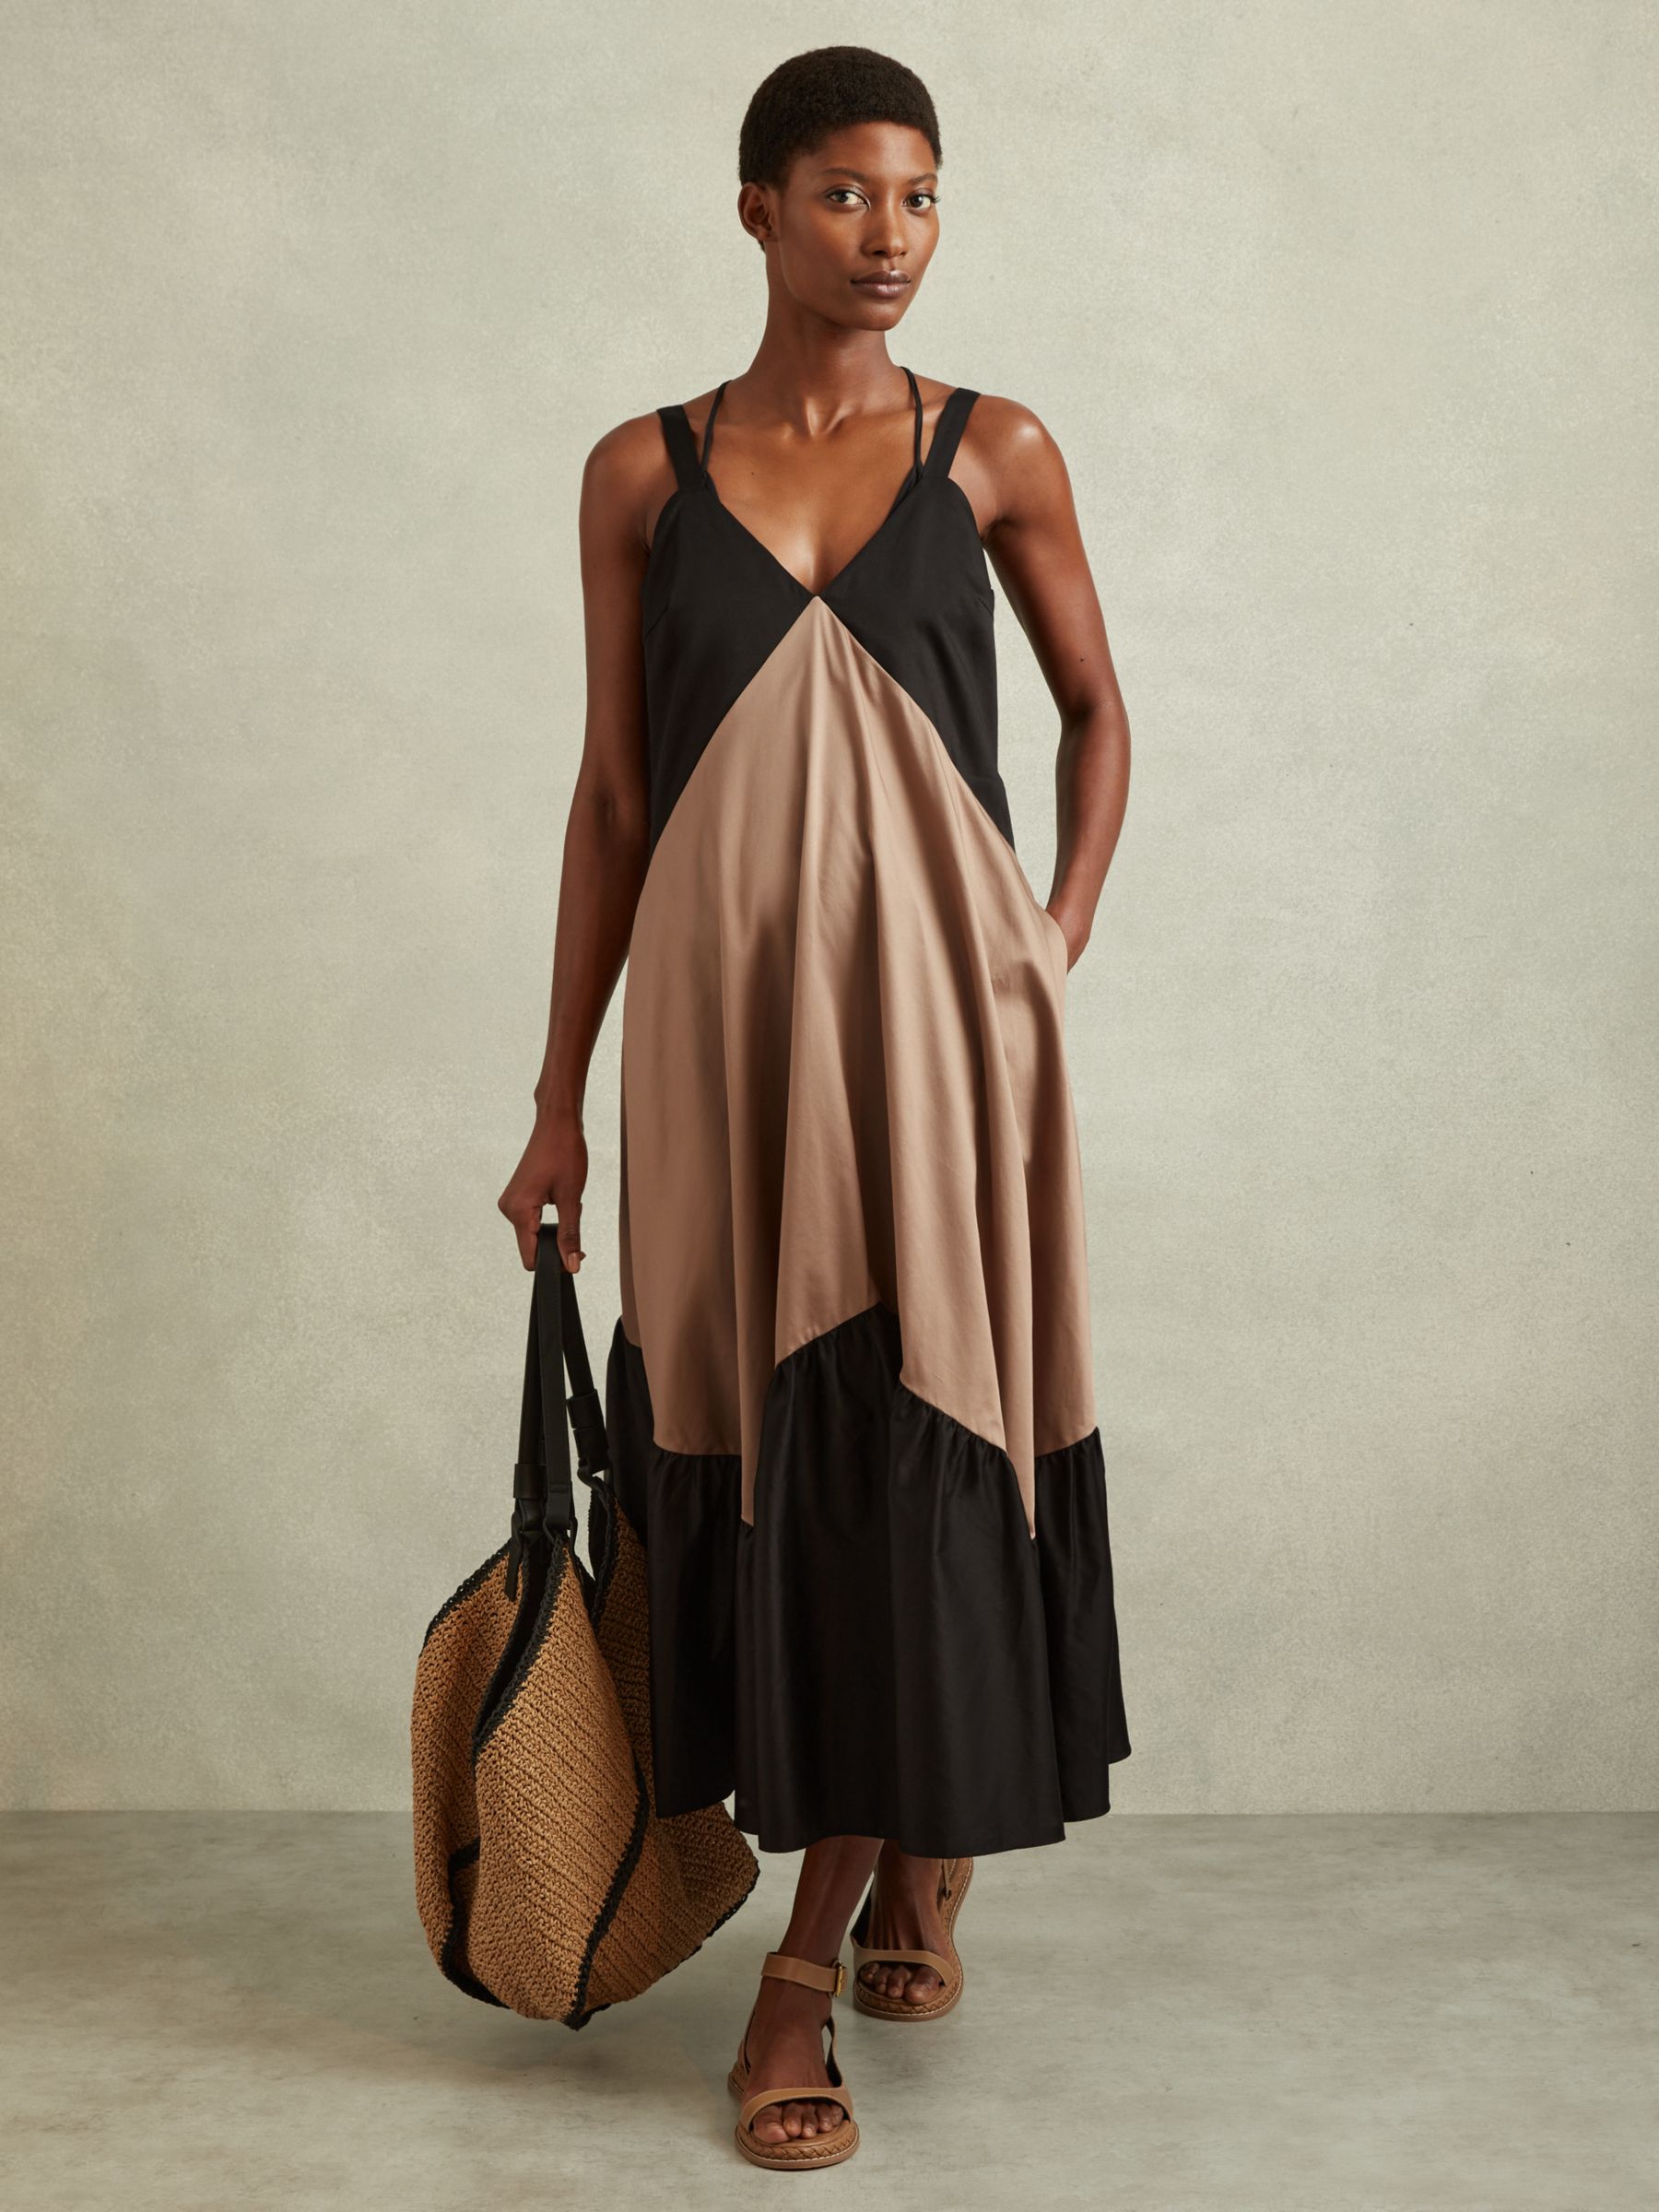 Reiss Natalie Colour Block Dress, Brown/Black, 6